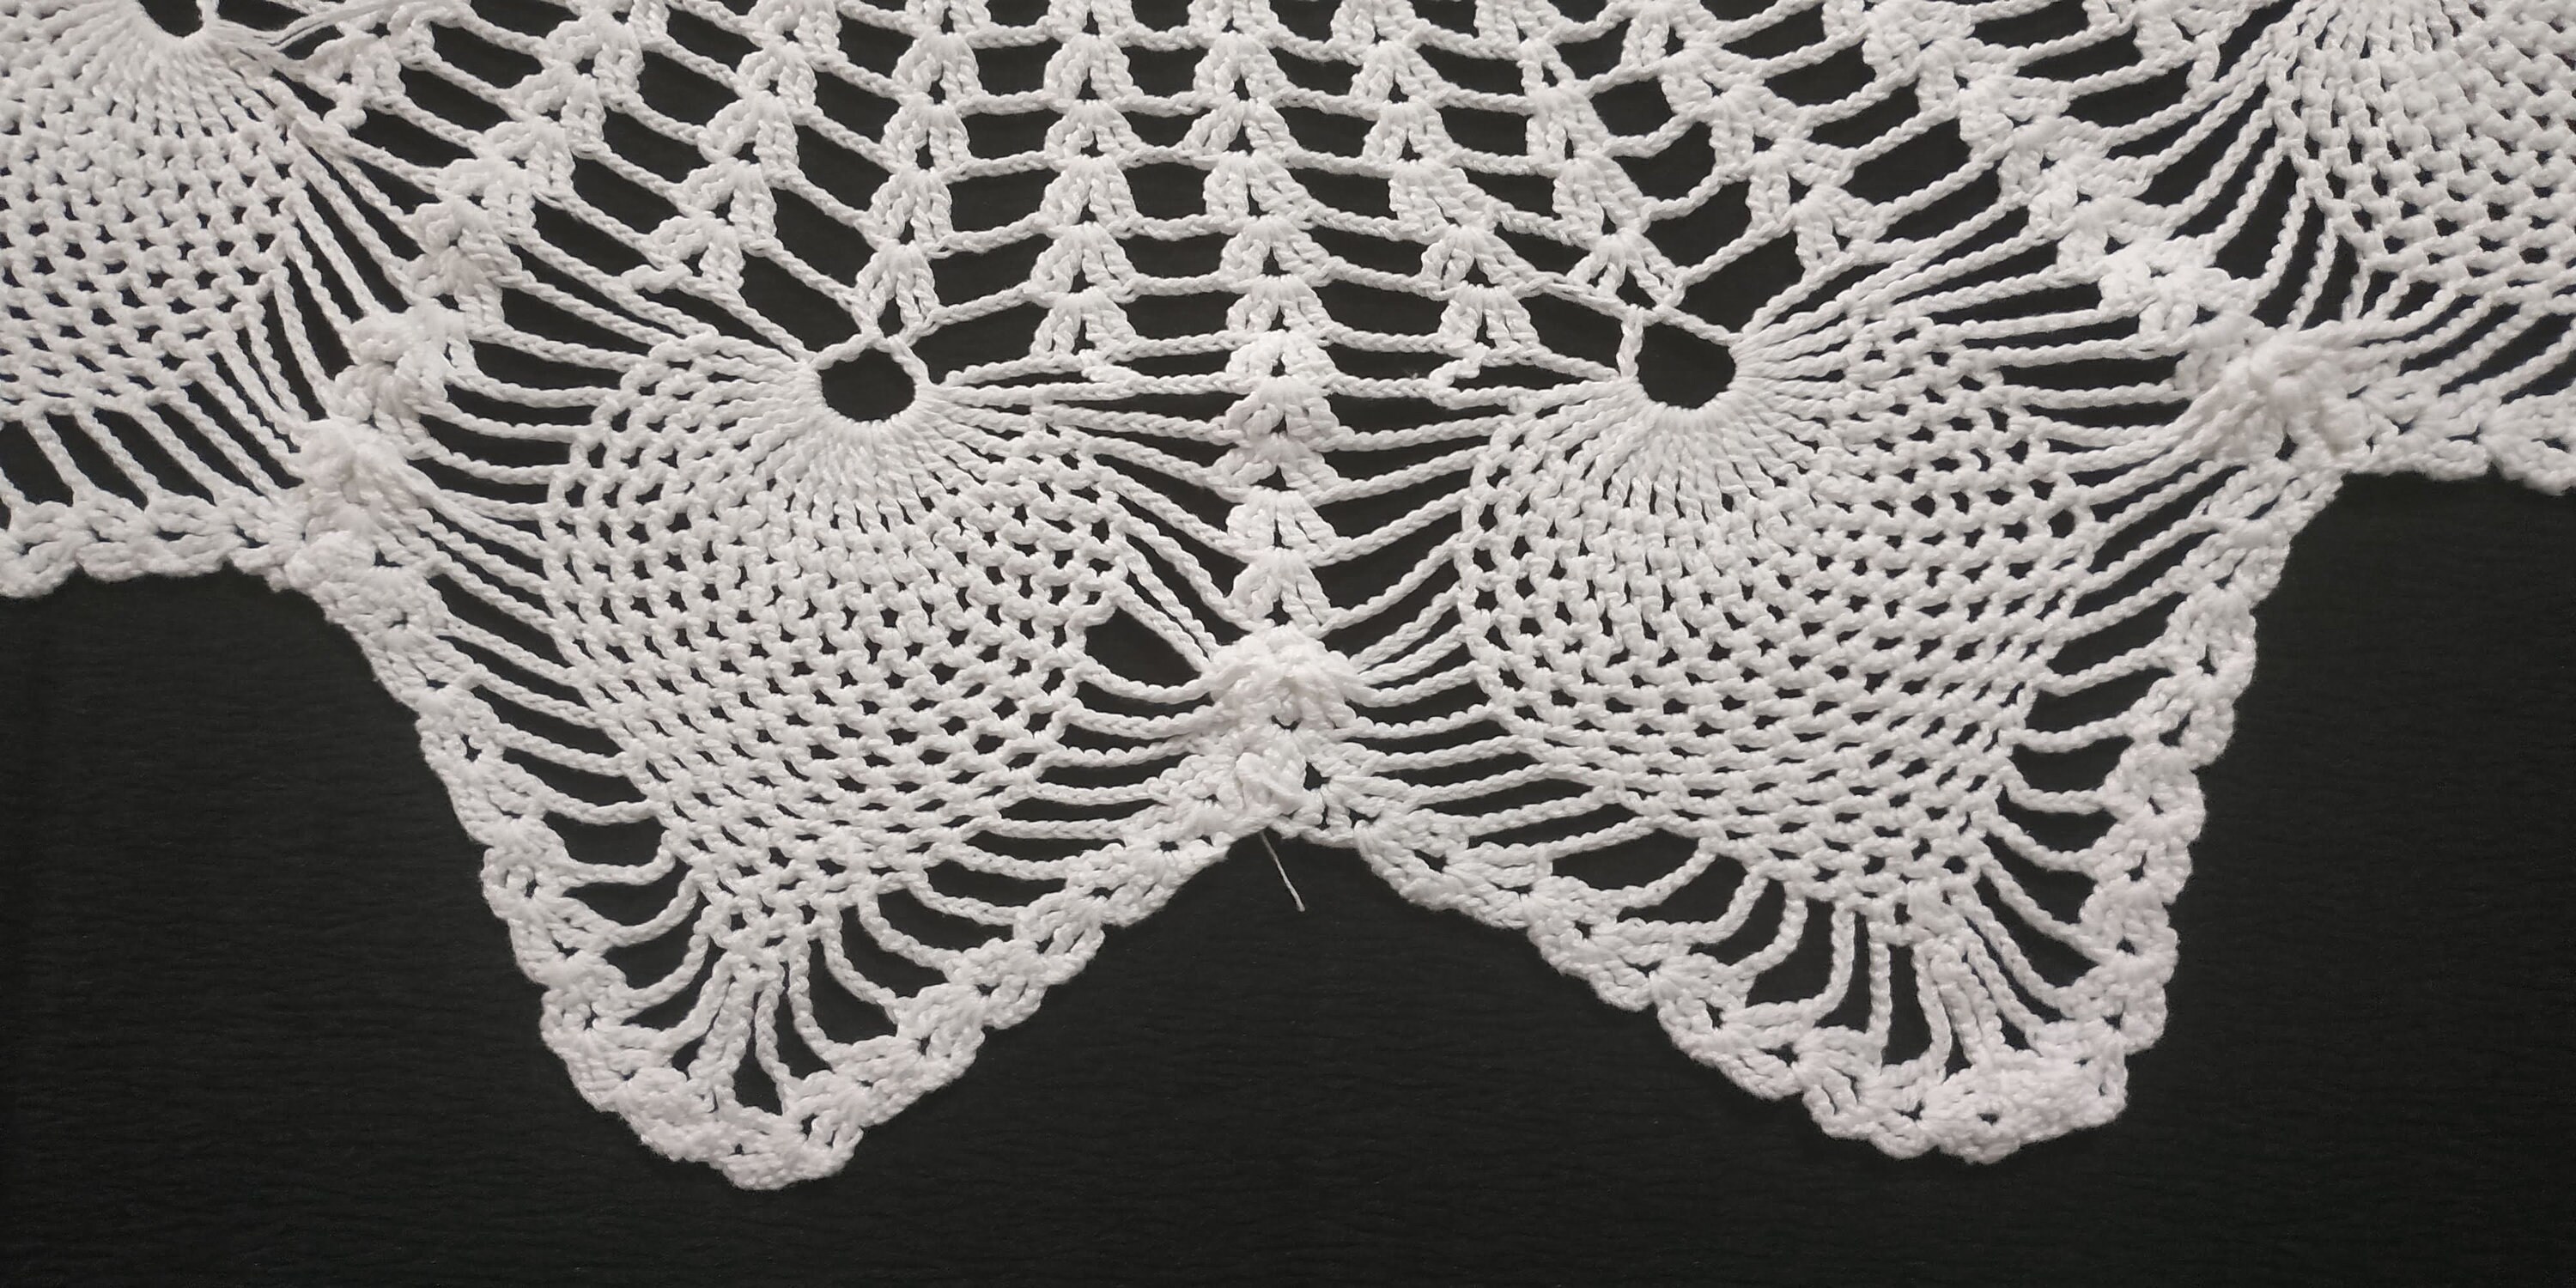 Crochet.lv (@crochet.lv) • Instagram photos and videos